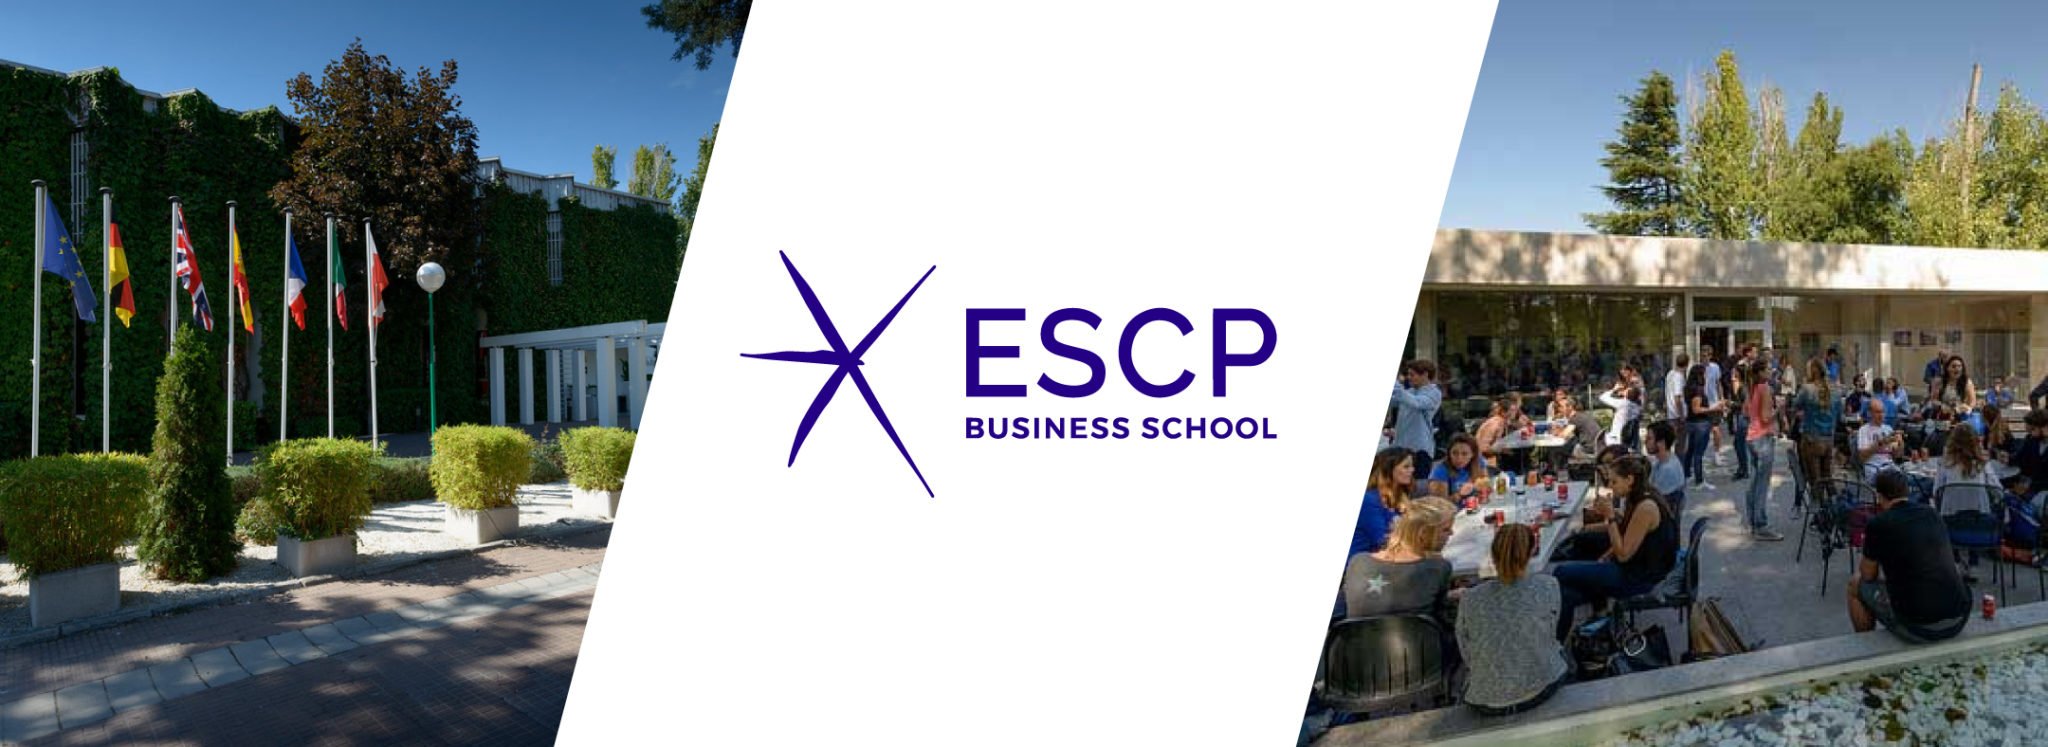 web-escp-business-school-2048x747